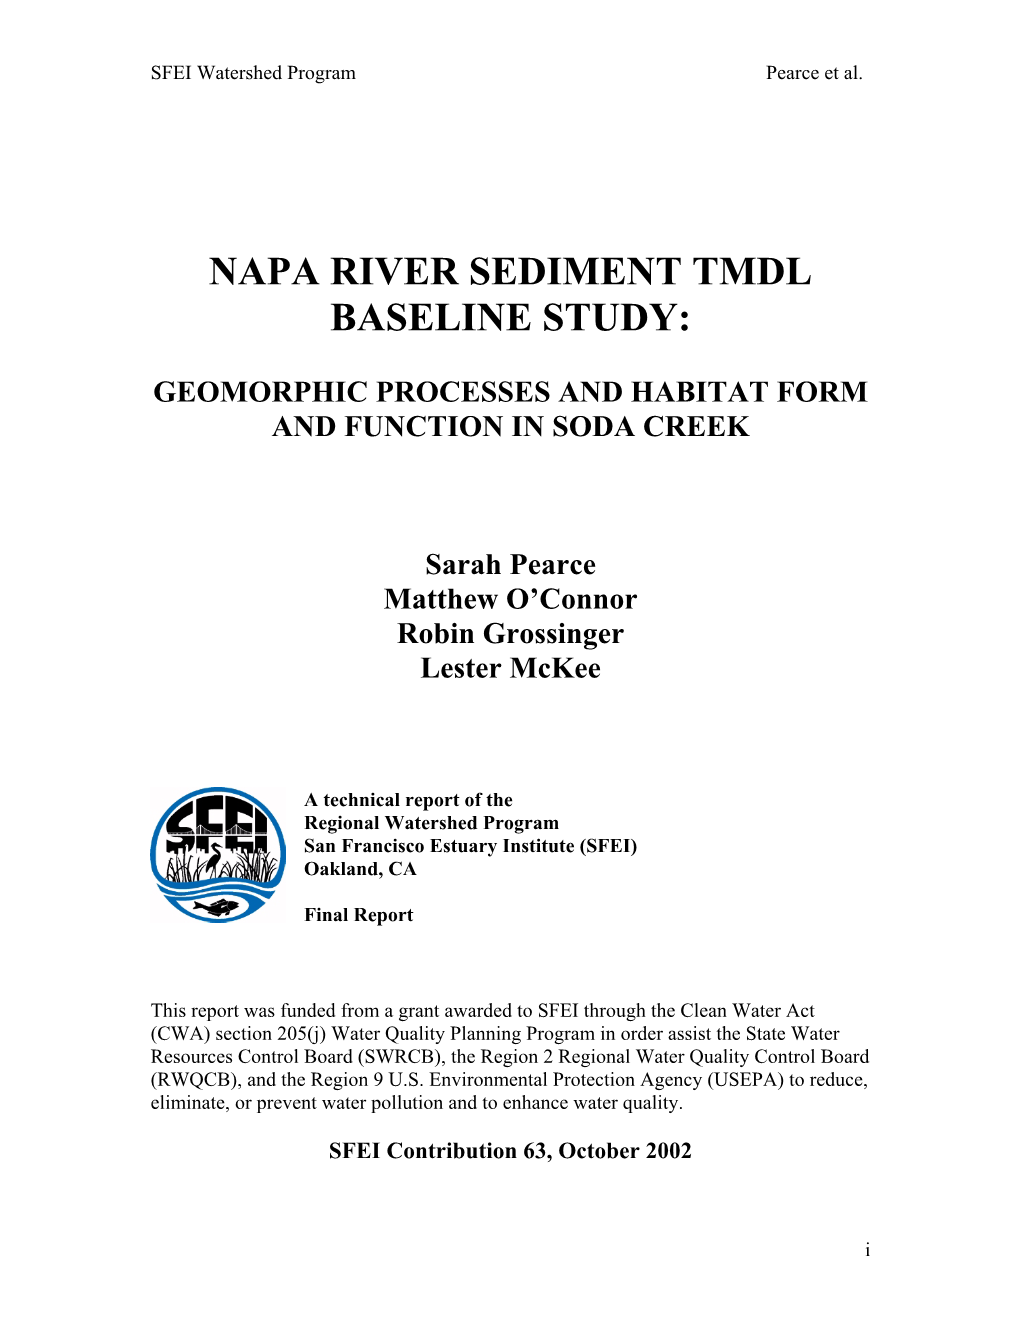 Napa River Sediment Tmdl Baseline Study